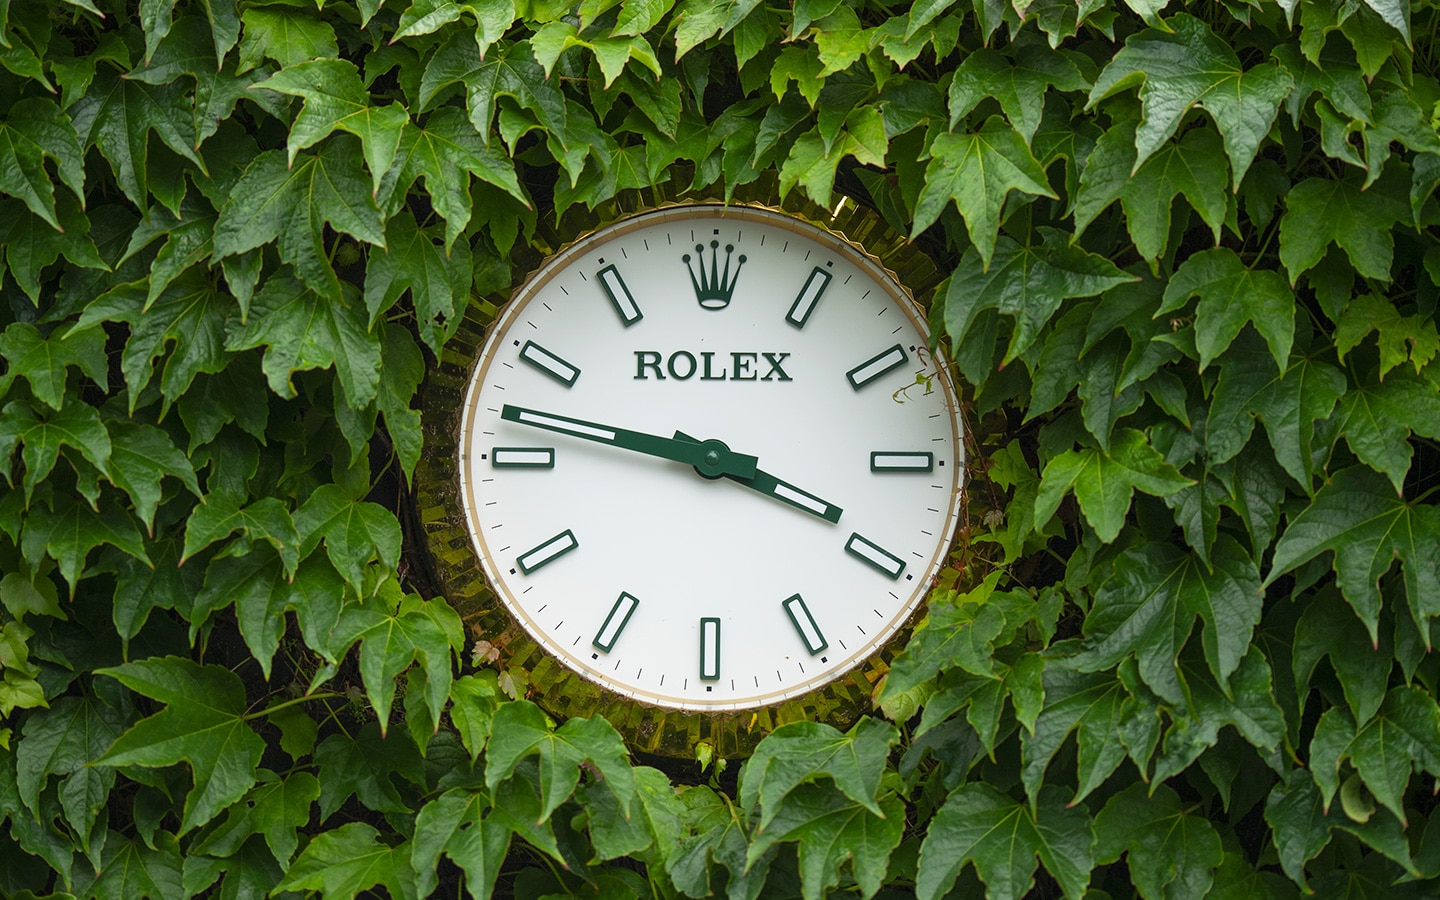 Rolex clock